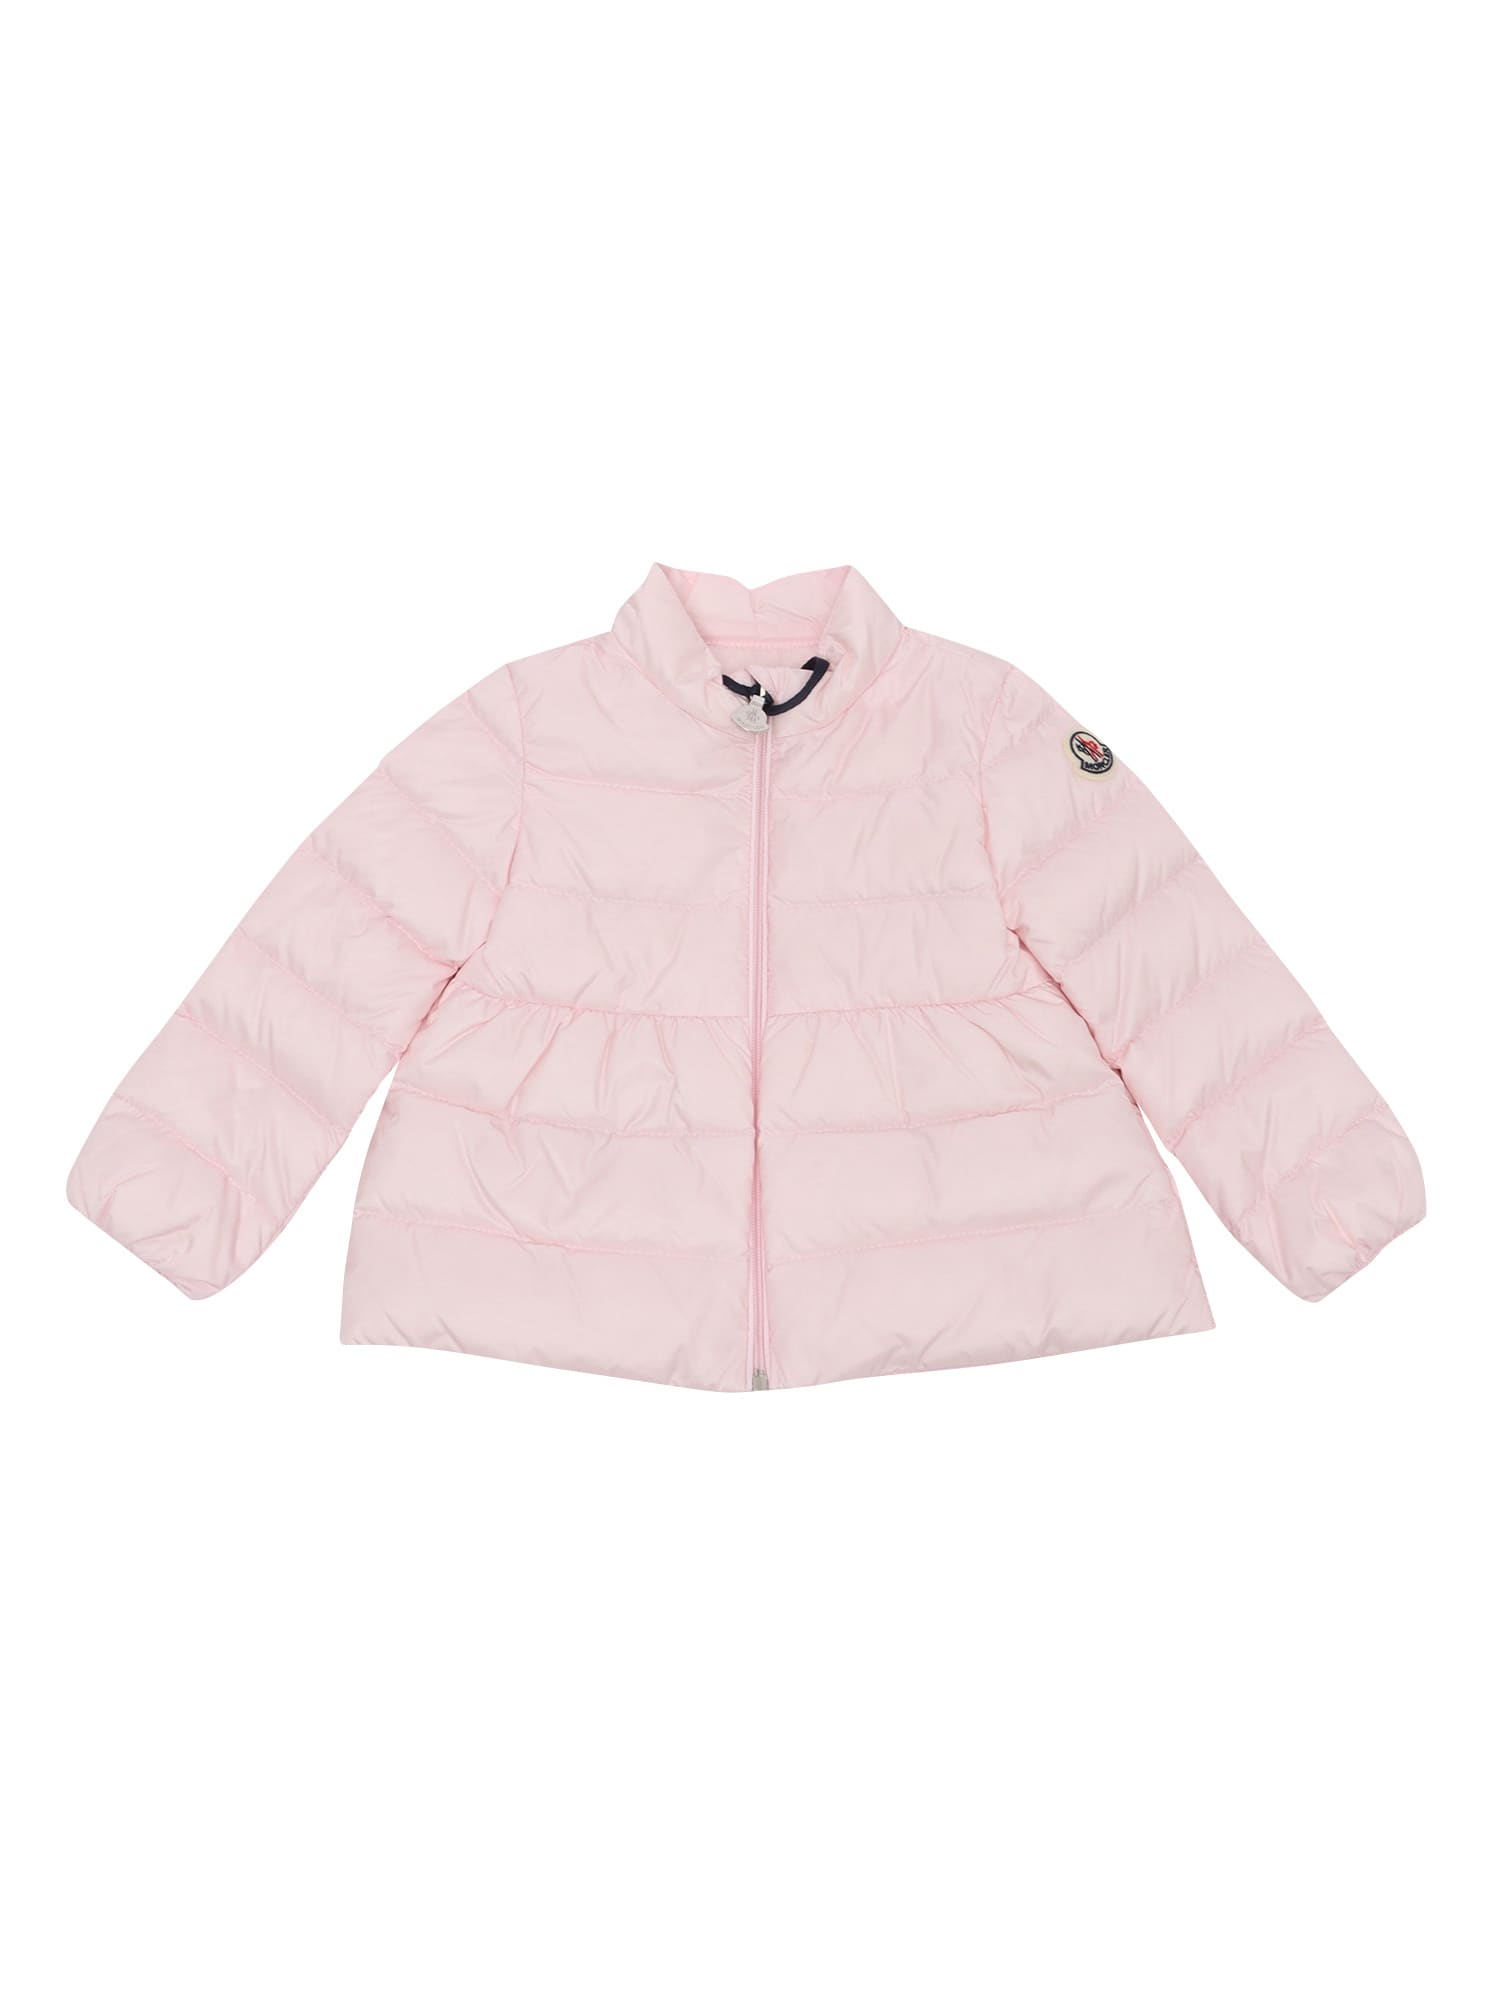 Moncler Babies' Joelle Pink Down Jacket